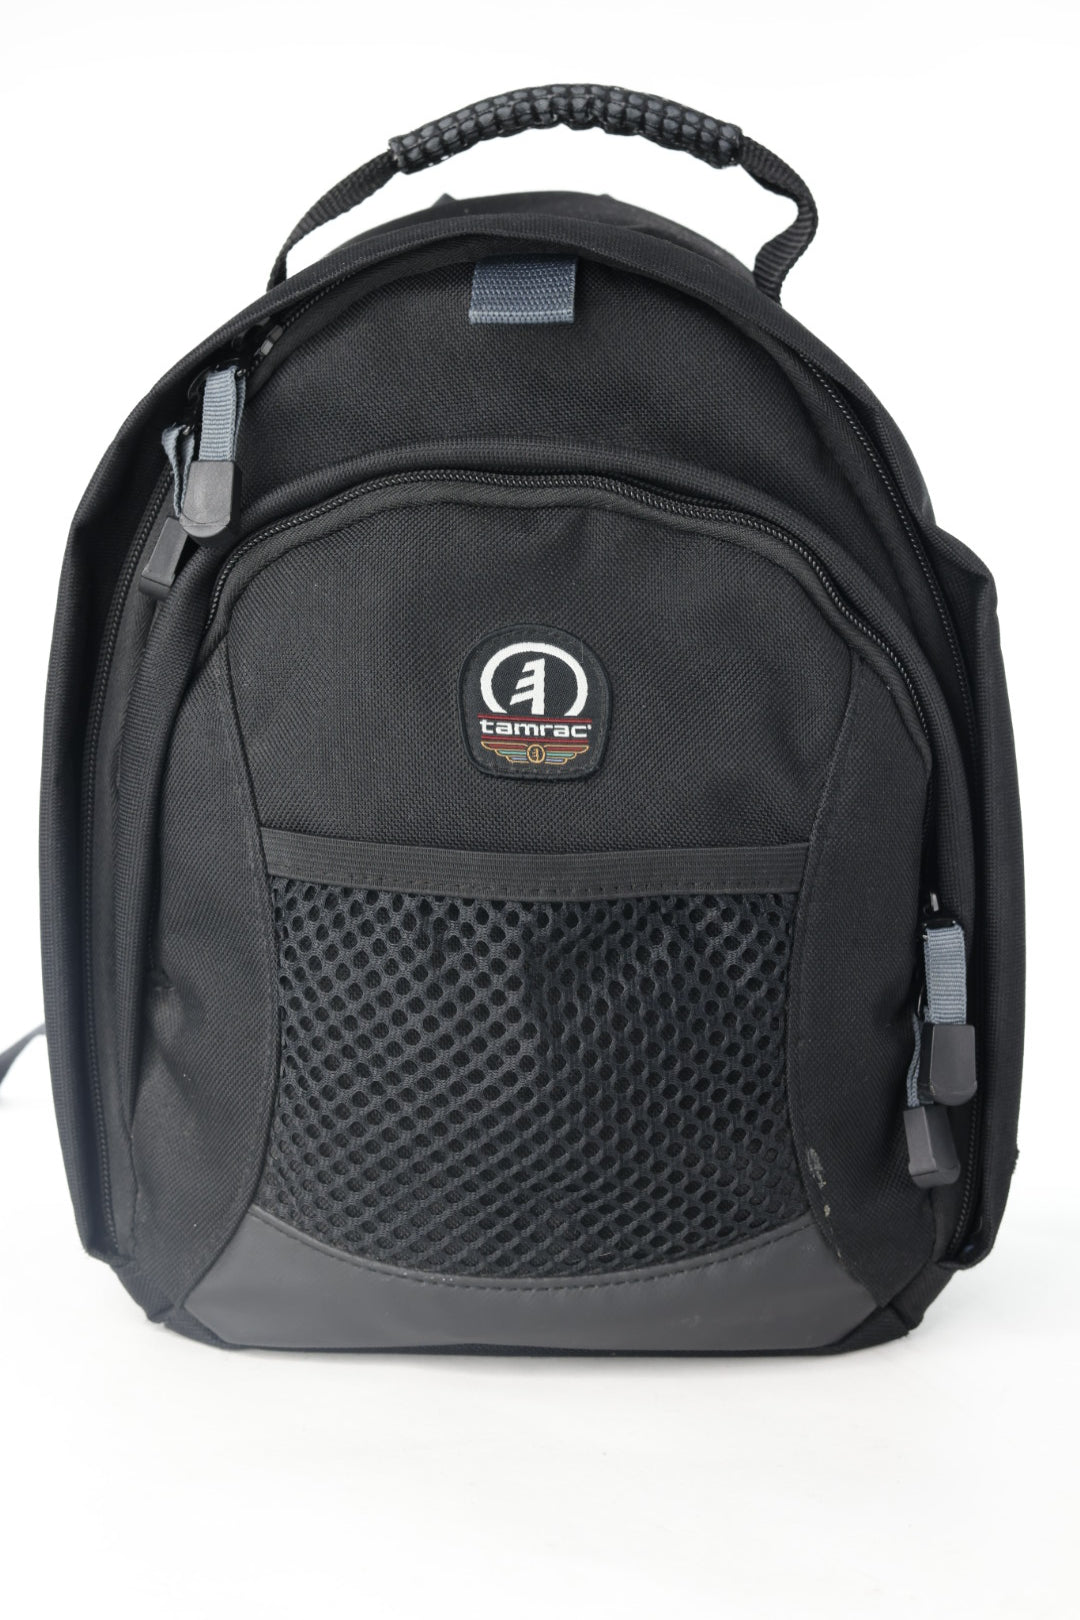 Tamrac Mini Backpack 3571, Black, Used